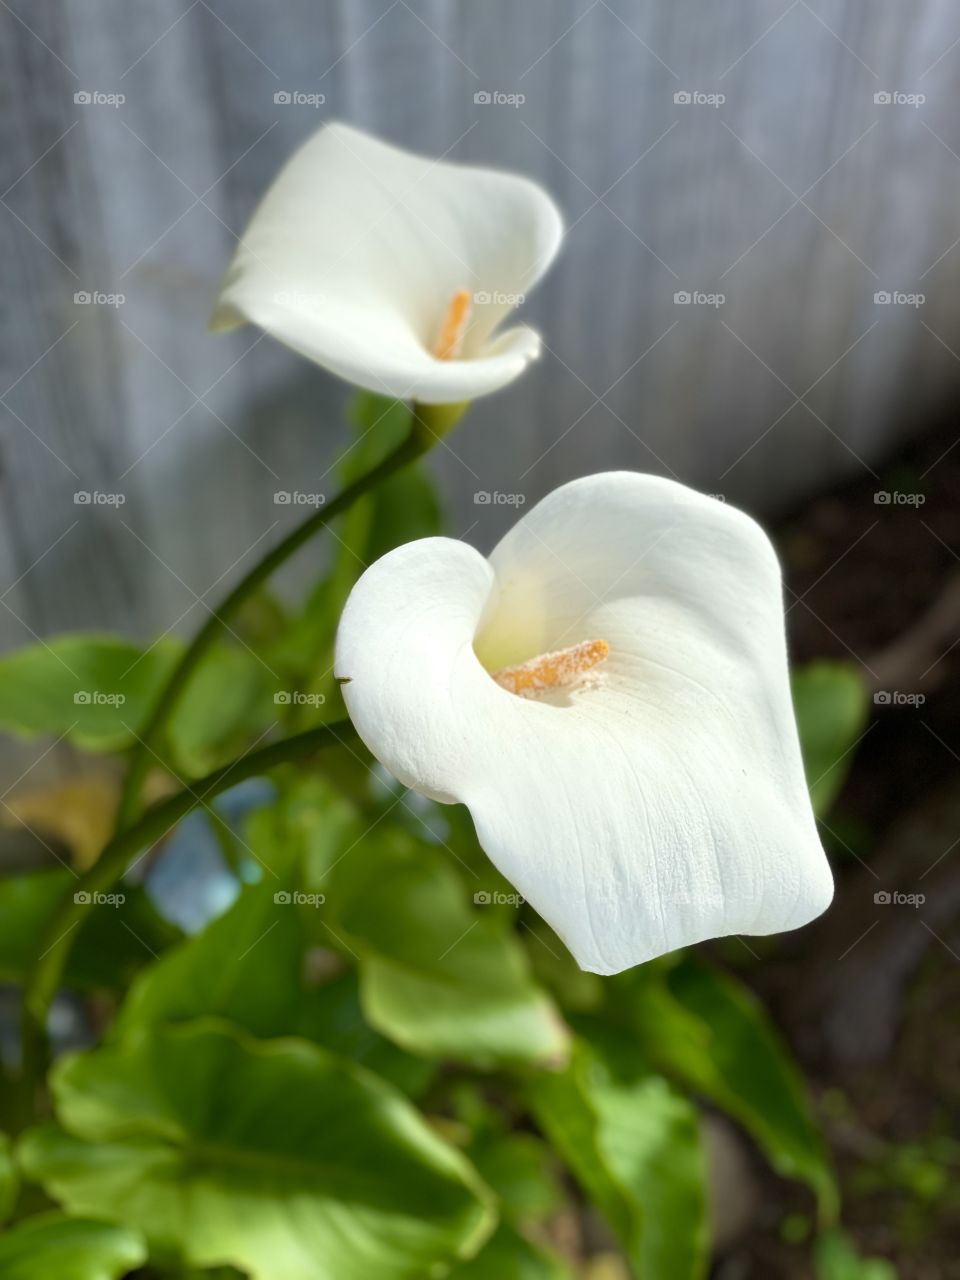 2 lilies